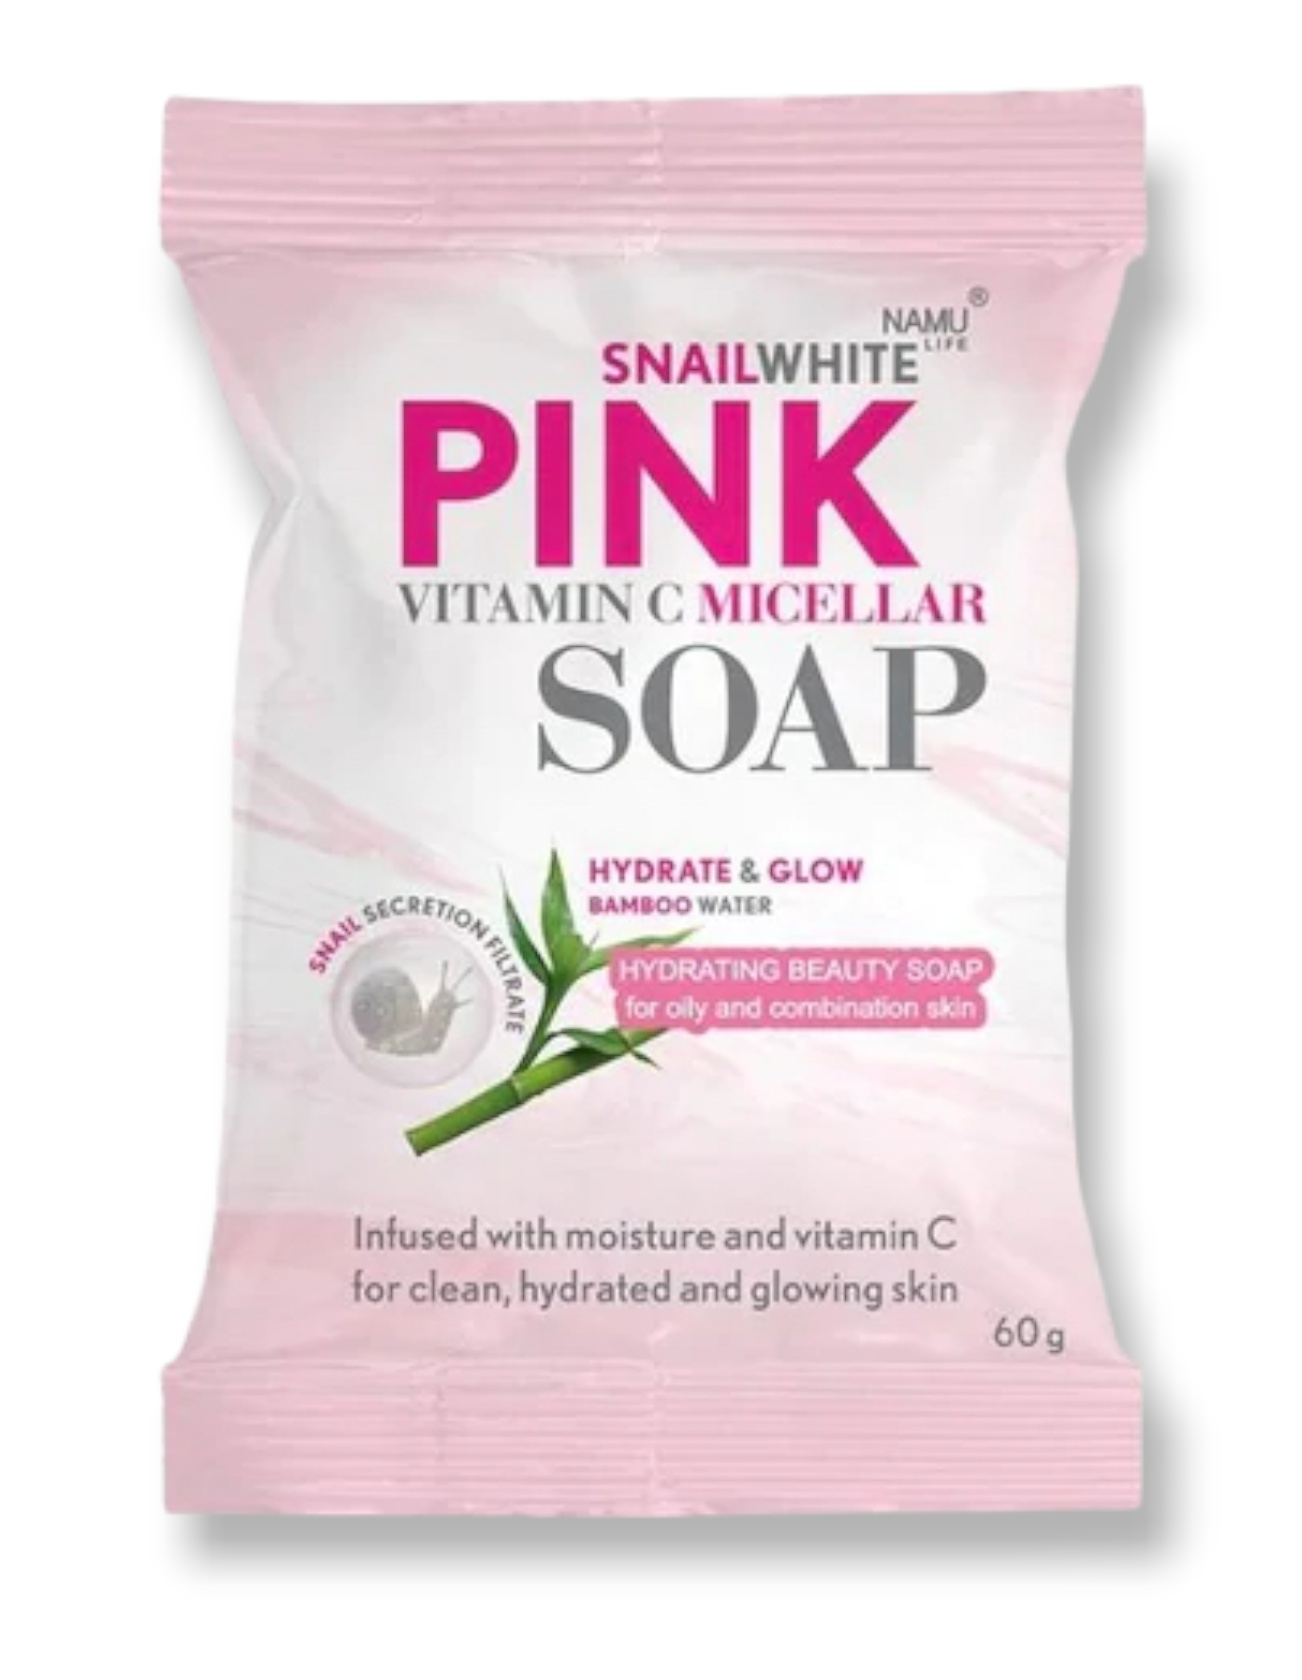 SNAILWHITE Pink Vitamin C Micellar Soap